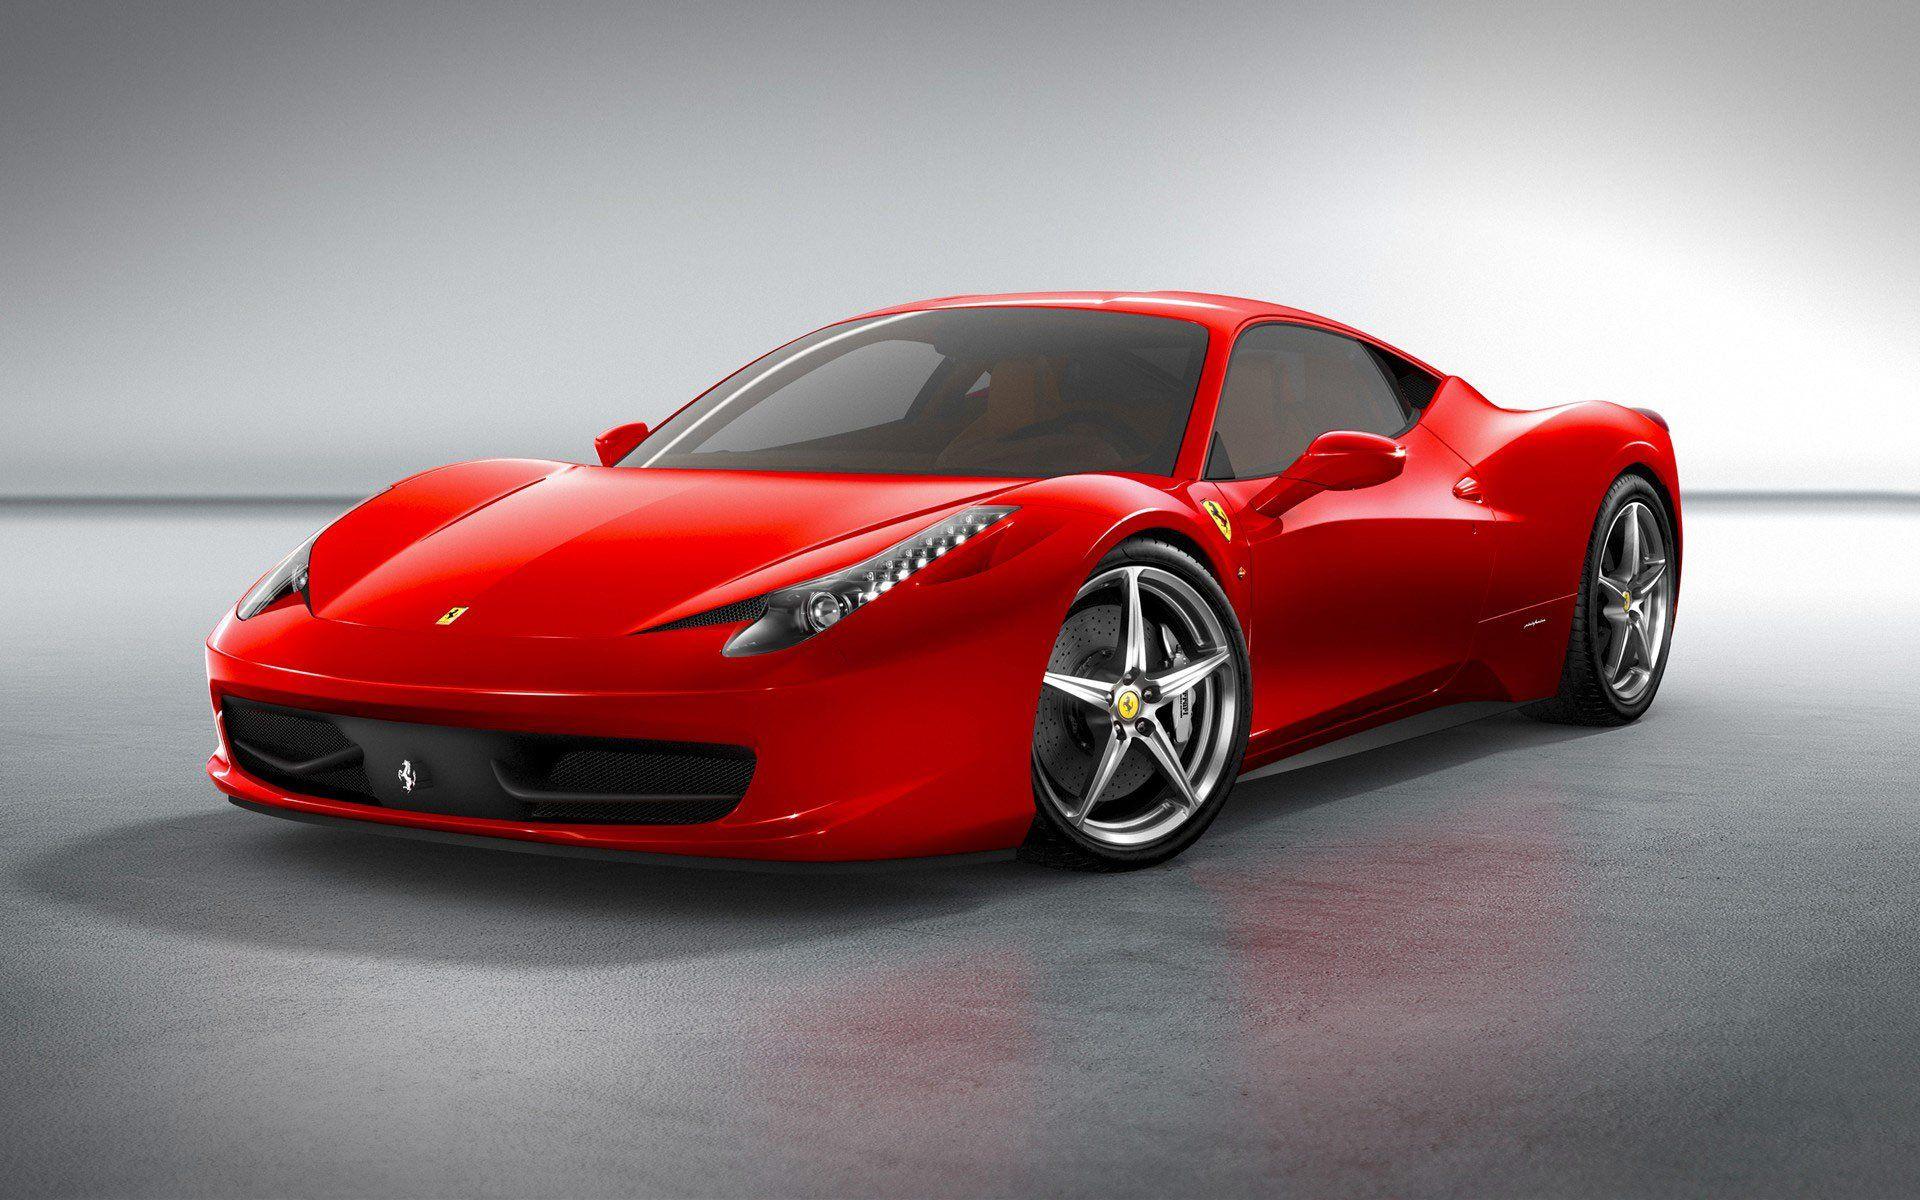 Ferrari HD Wallpaper and Background Image